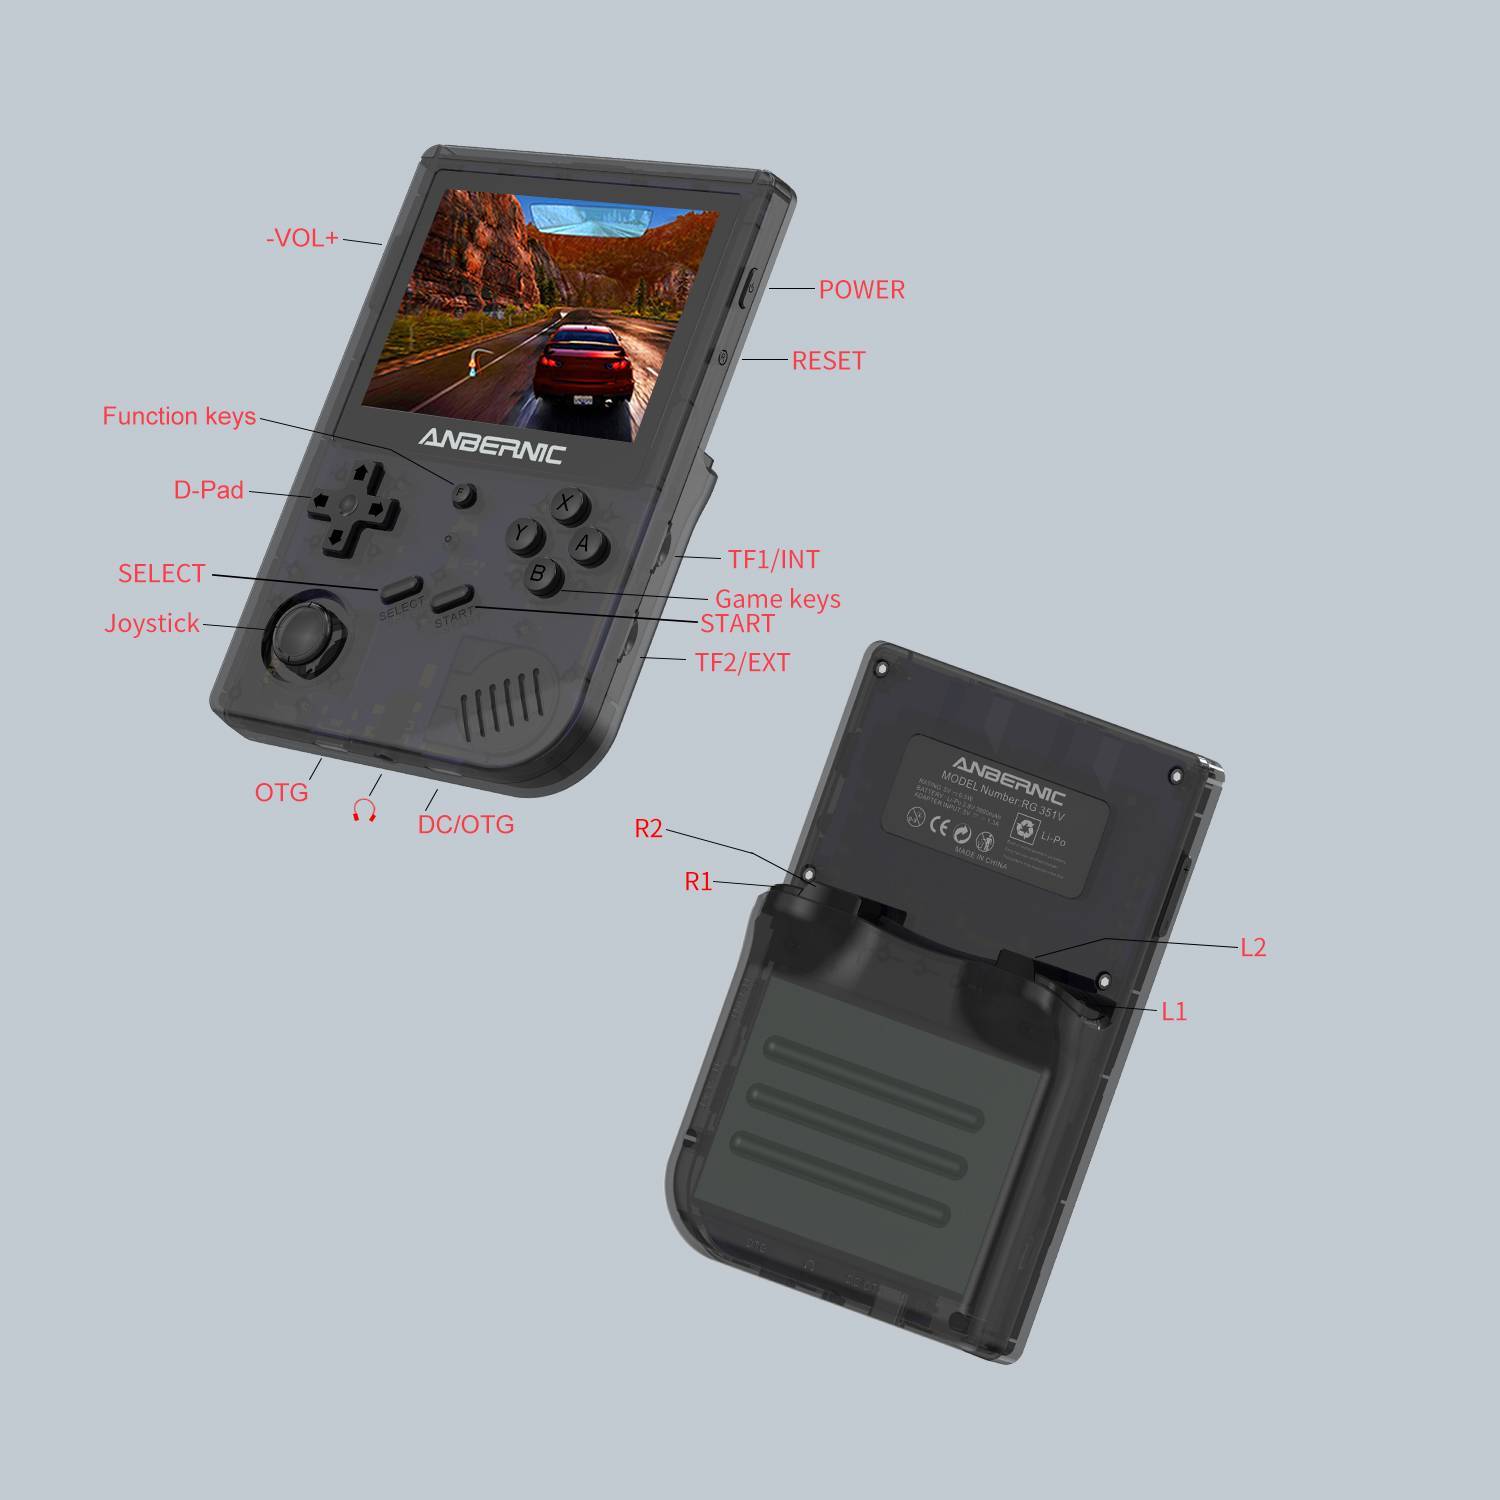 ANBERNIC Black RG351V Retro Gaming Handheld - Showing Button mapping